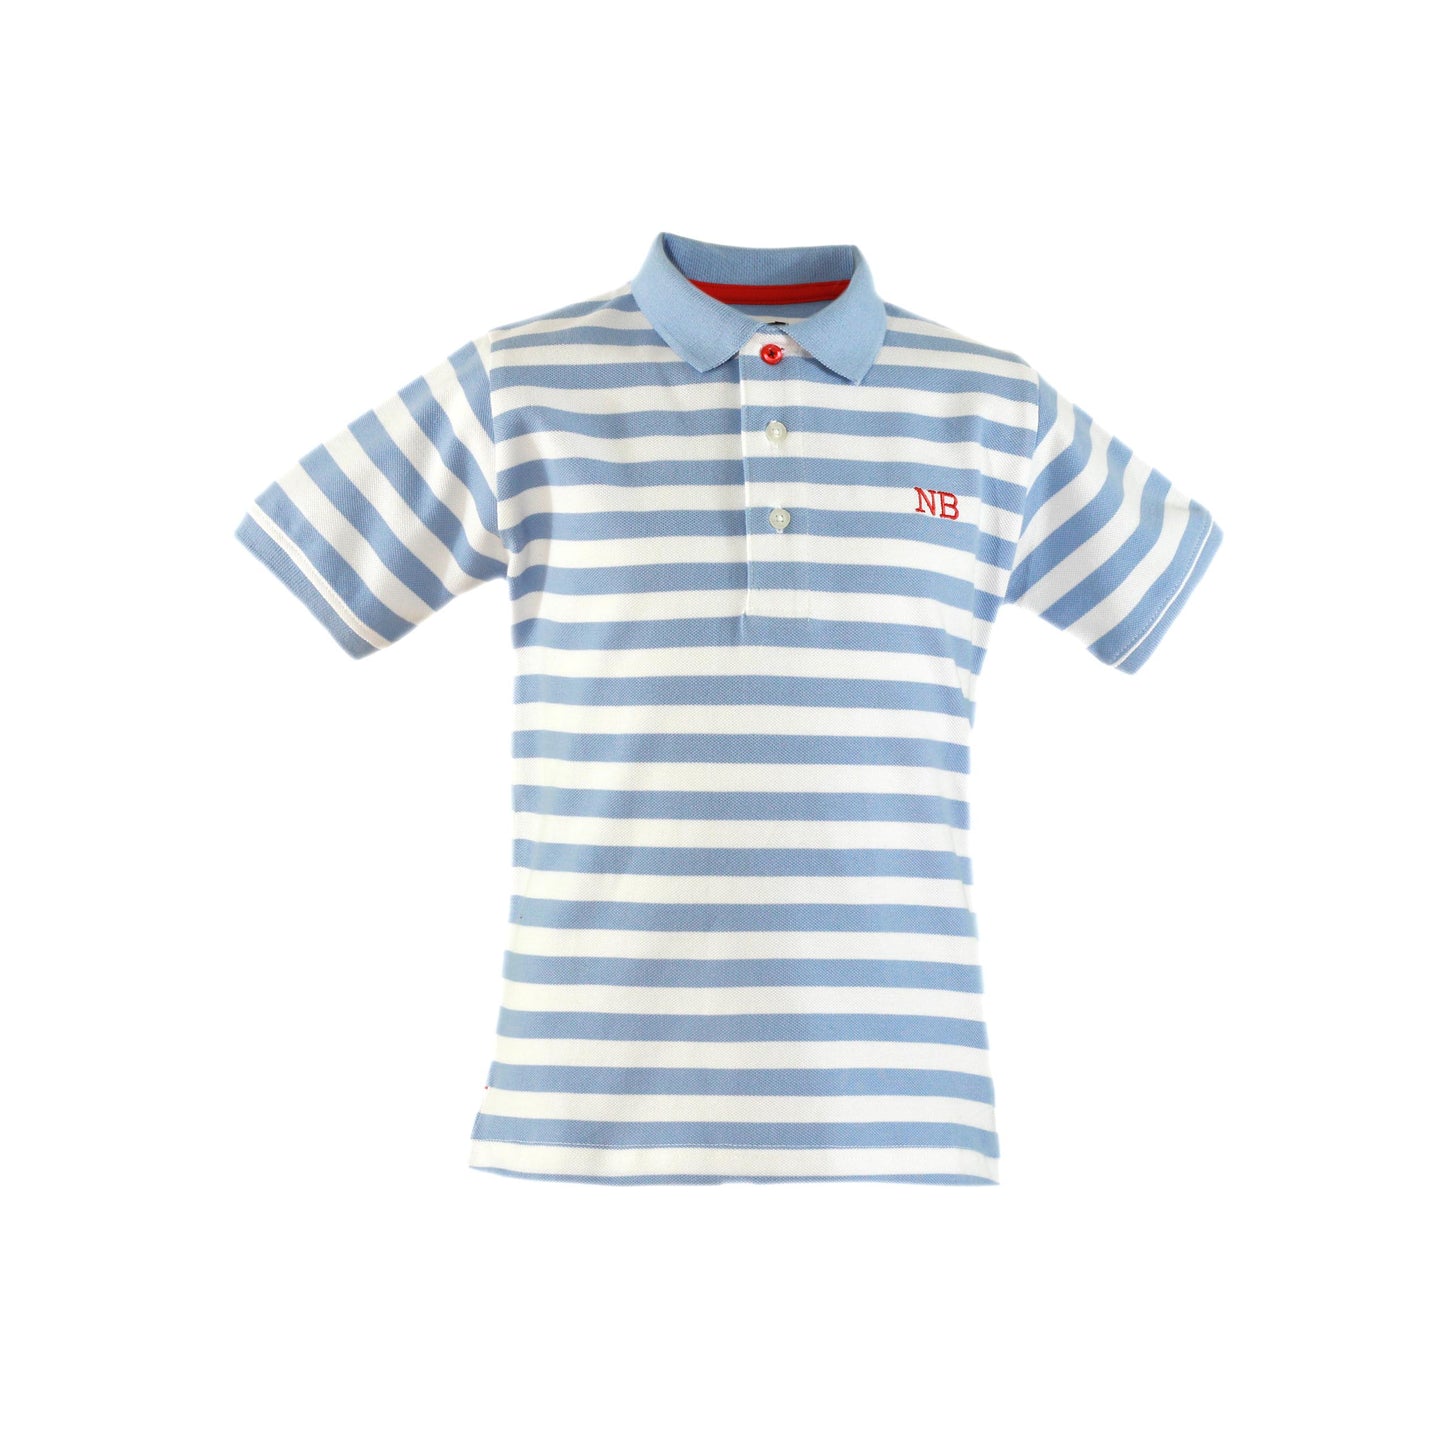 MIRANDA NEL BLU Blue & White Stripe Boys Polo Shirt - 1300